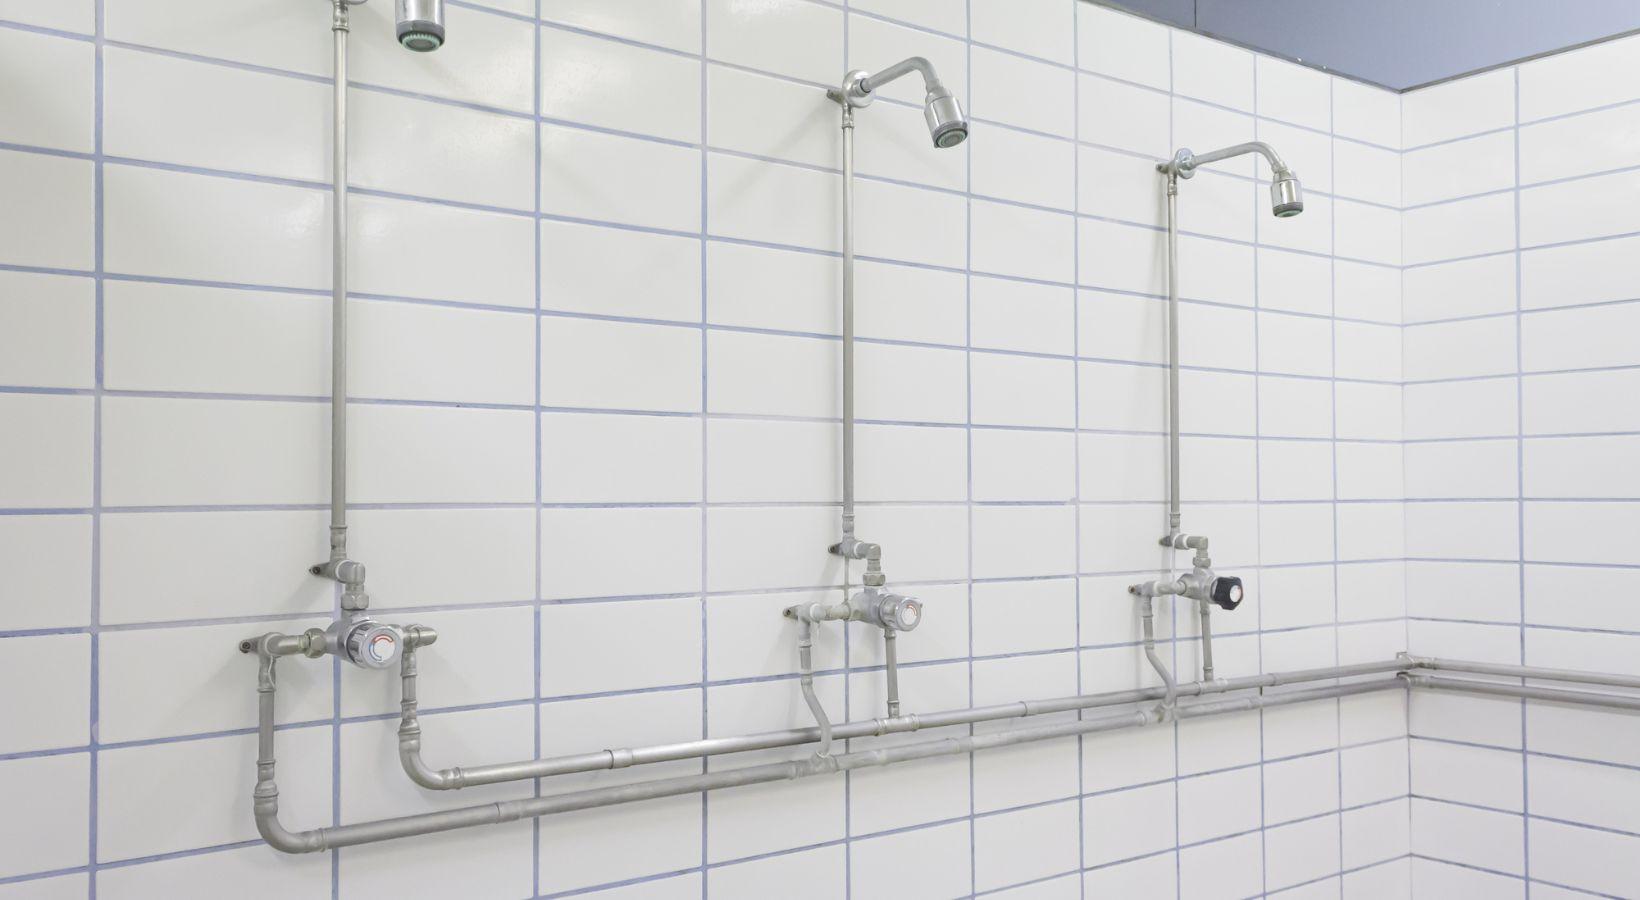 Installation robinet douche commune